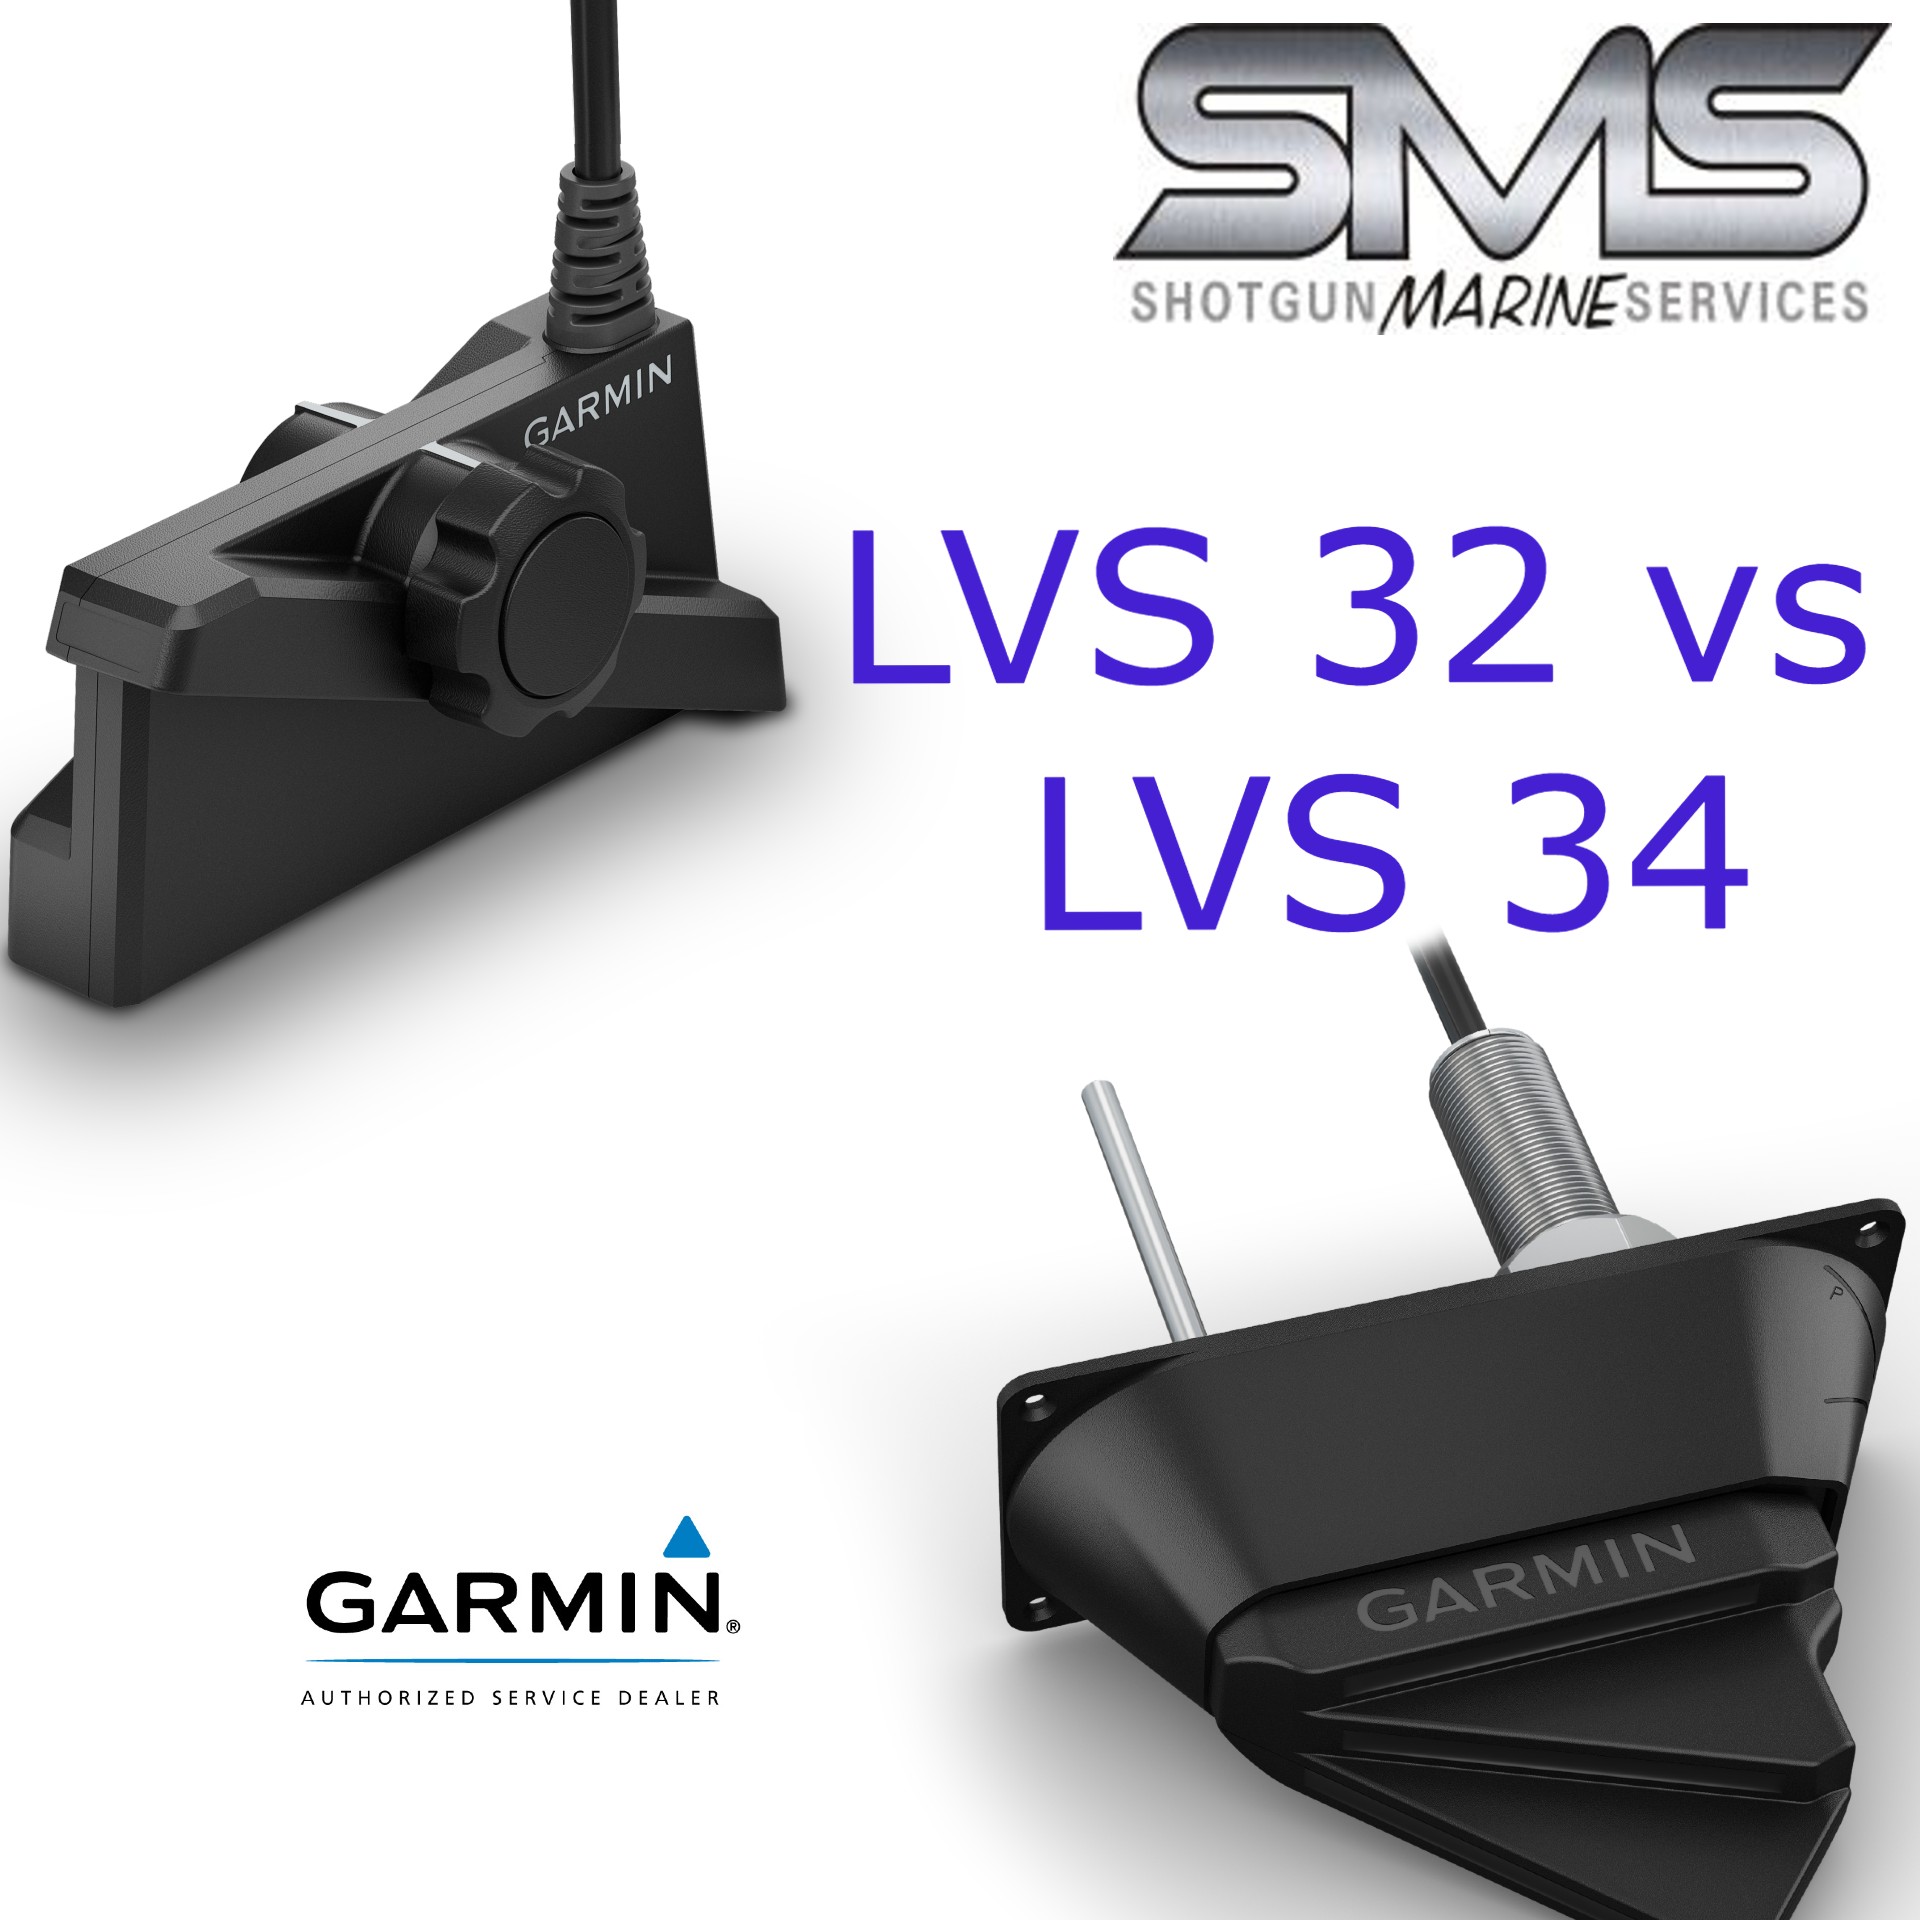 Garmin LiveScope Plus LVS34 Perspective Mount